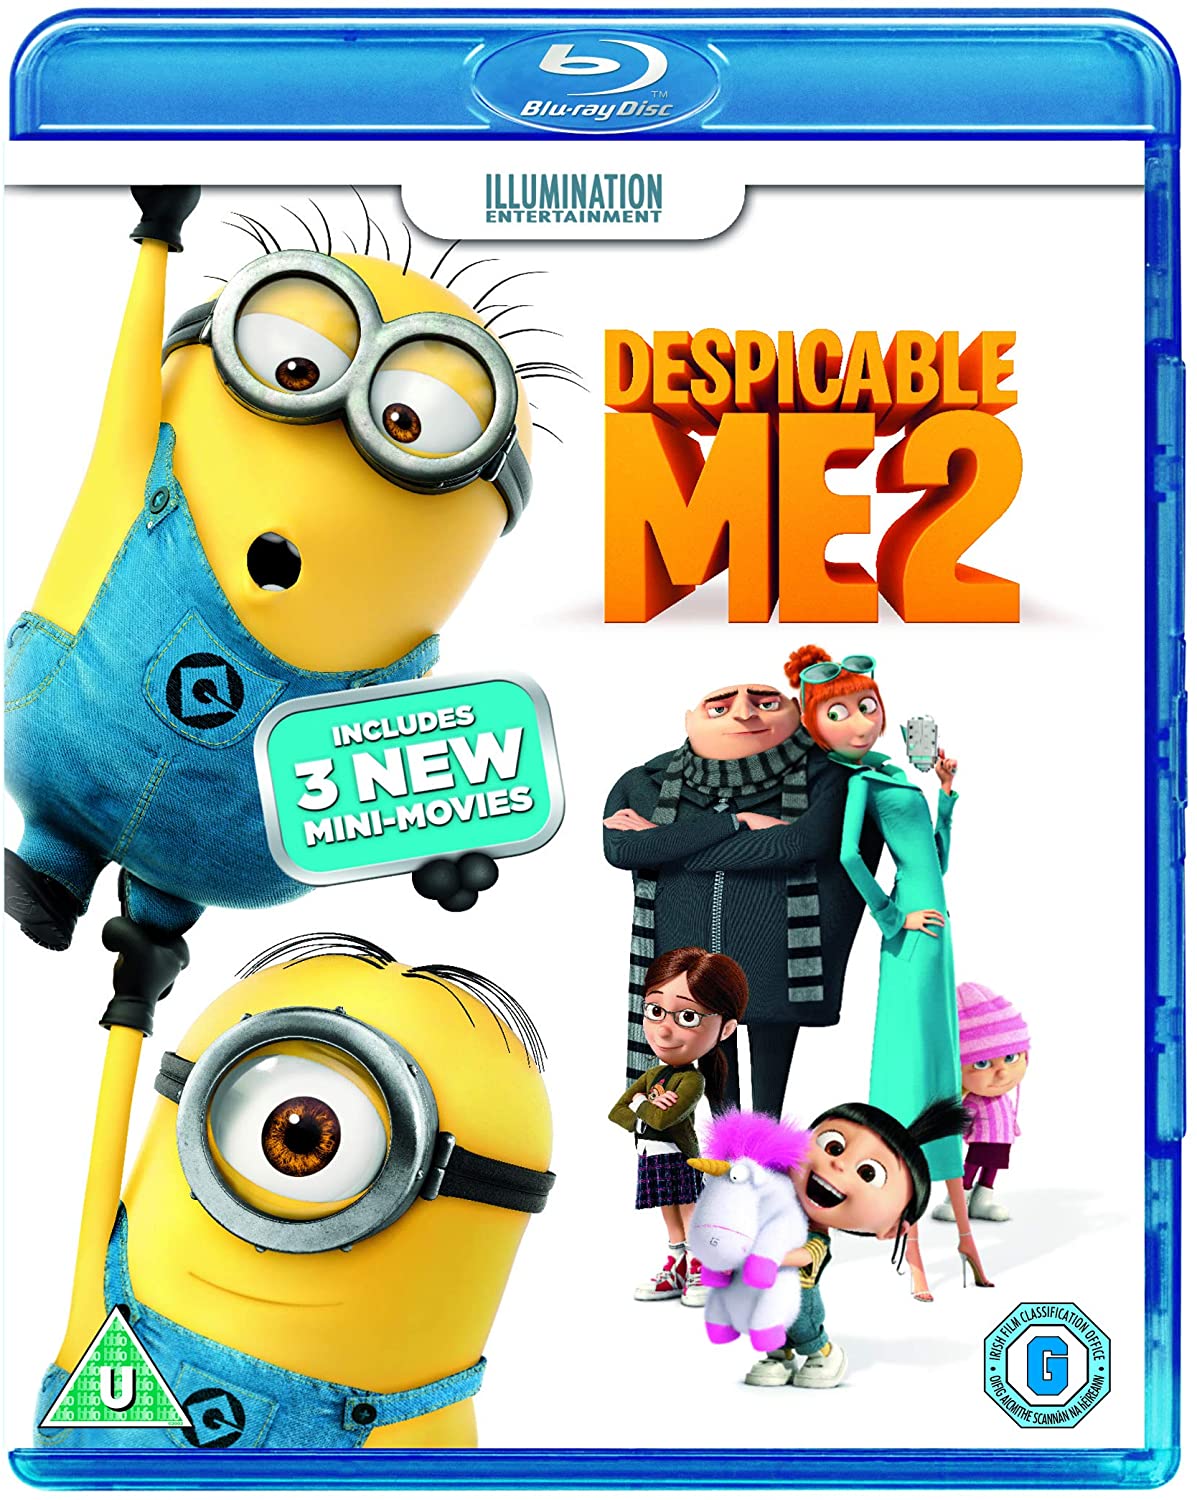 Despicable Me 2 (Illumination) (Blu-ray)